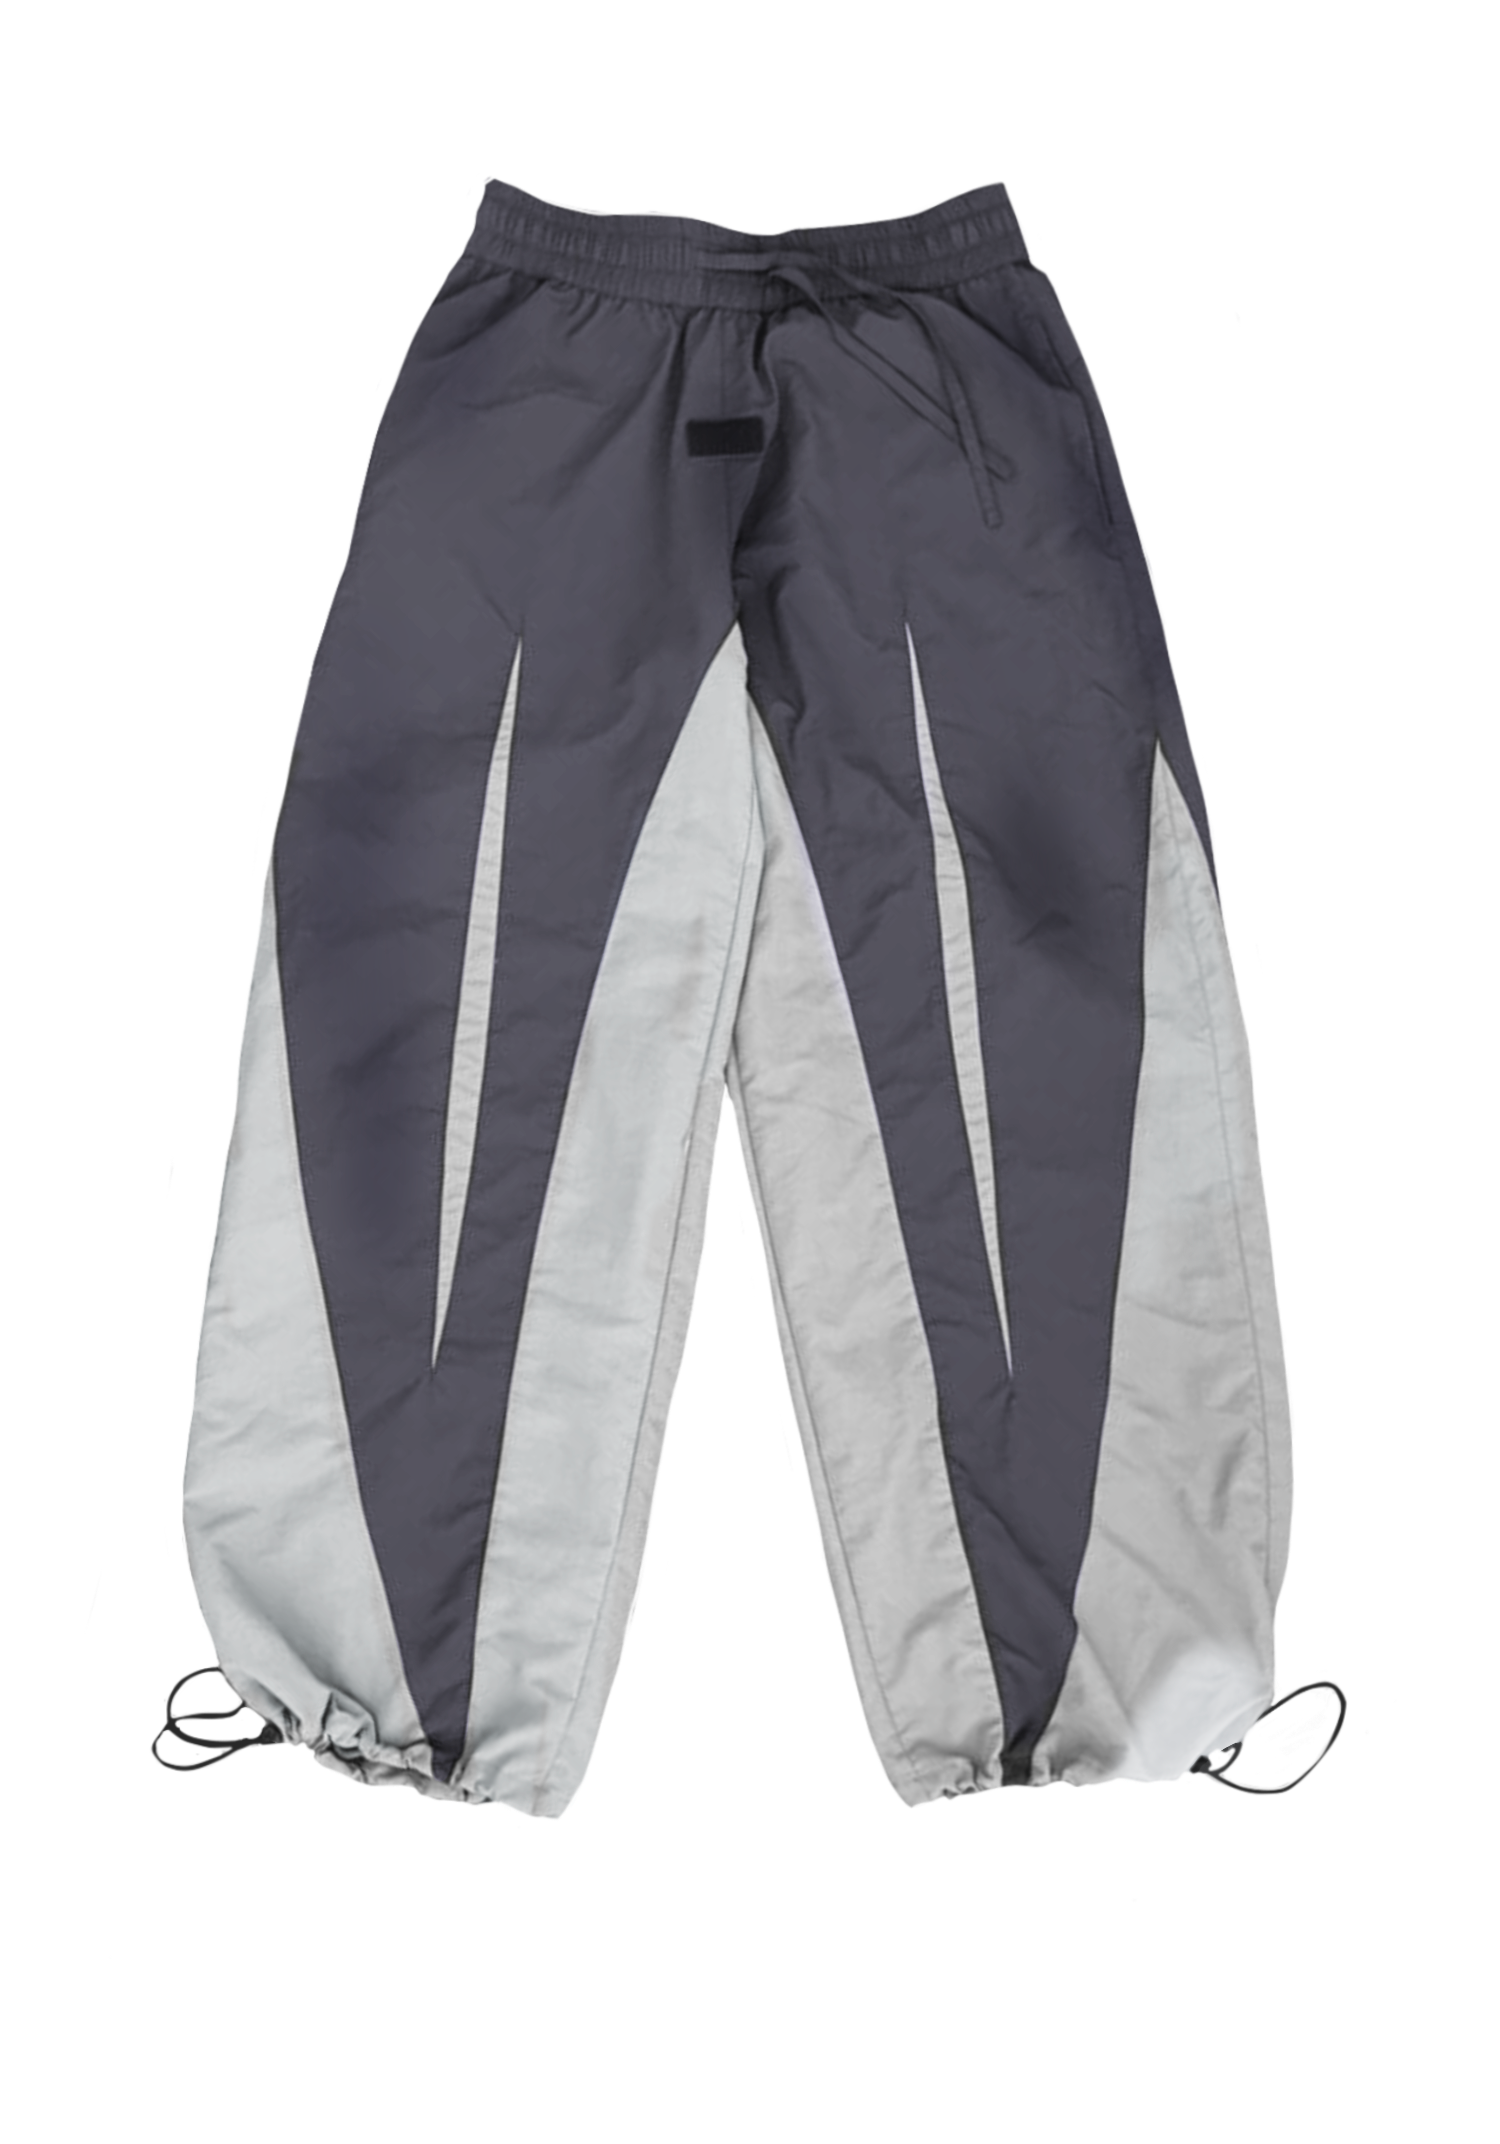 Men's Hooded Tracksuit 55 Piece Casual Full Zip Jogging Sweatsuit  Sets(H.Grey,4XL) - Walmart.com